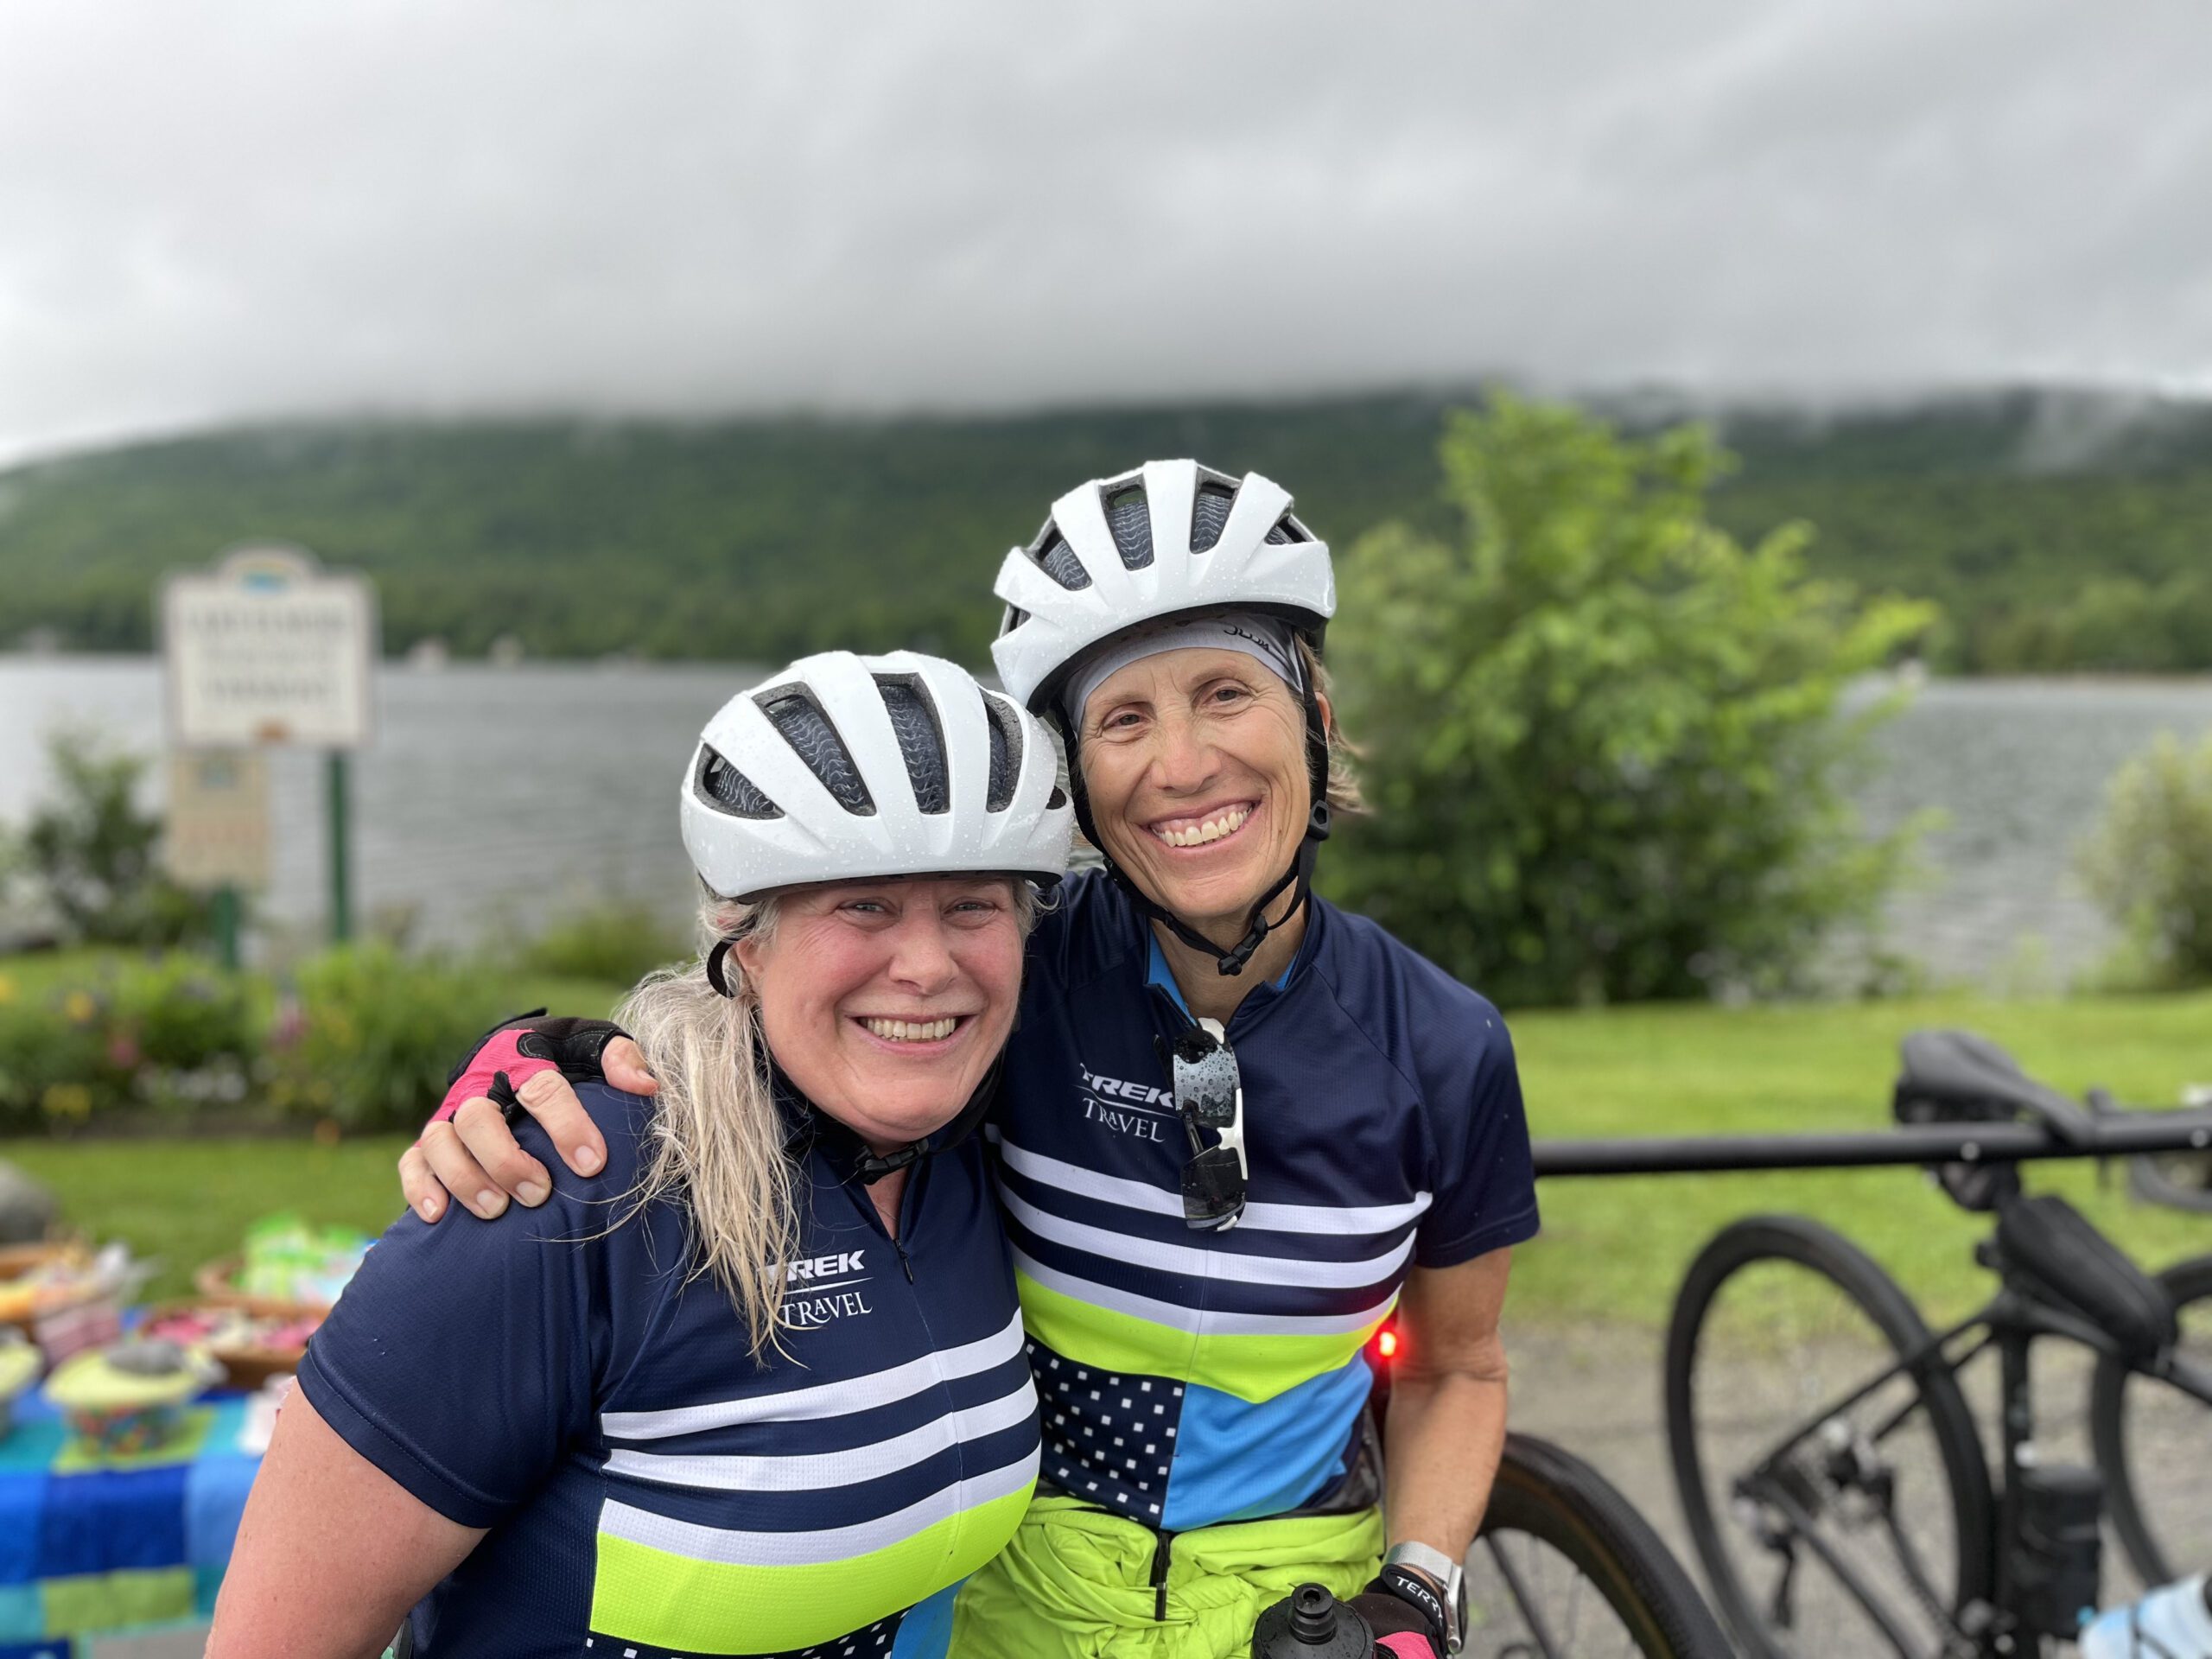 Two women in cycling gear smiling